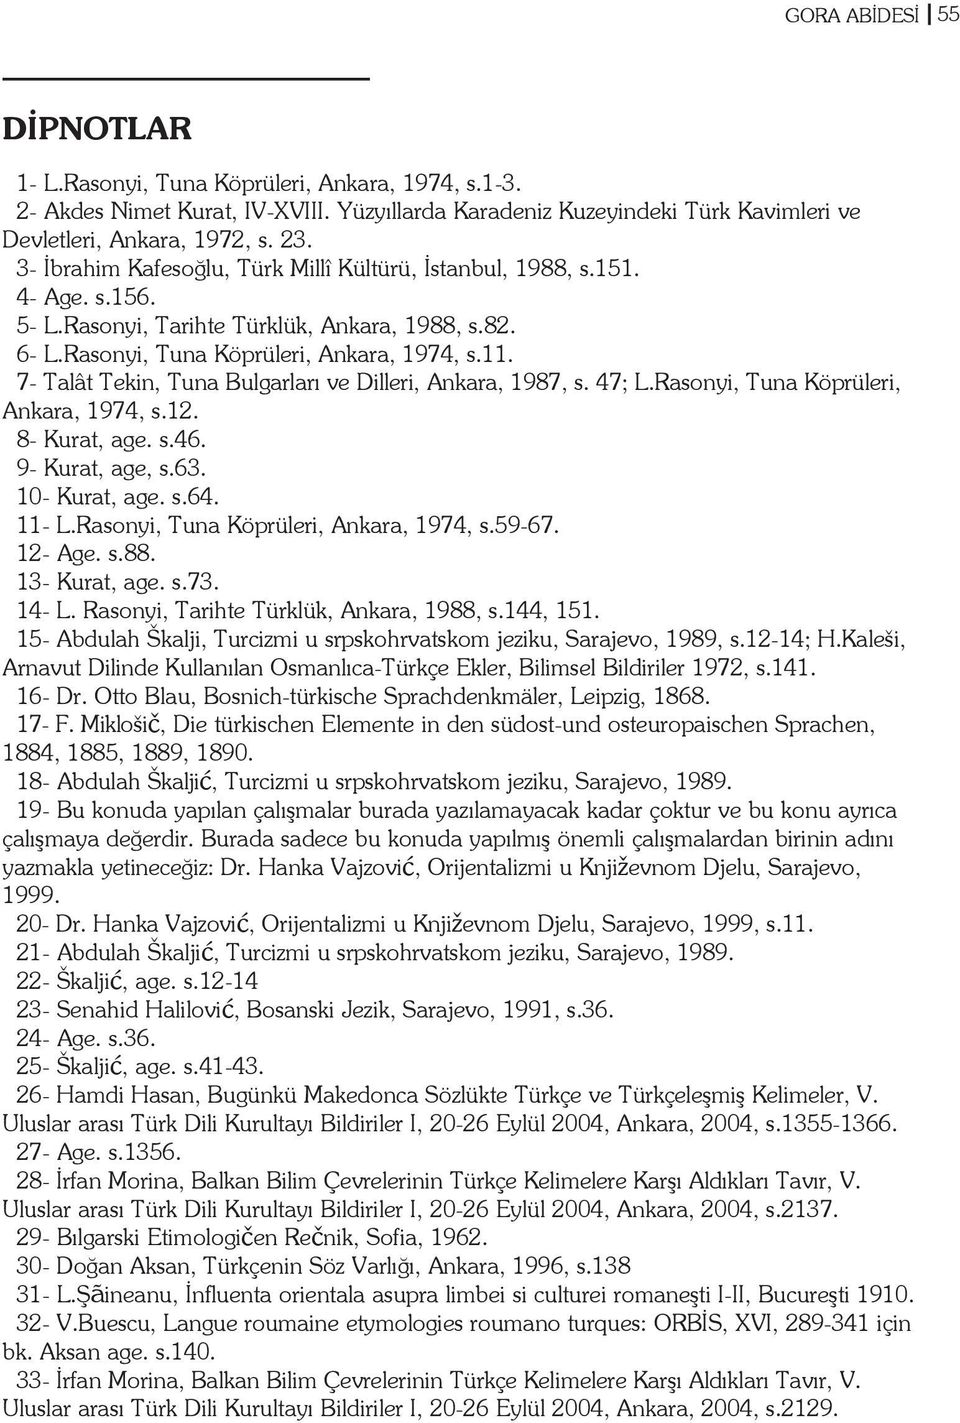 7- Talât Tekin, Tuna Bulgarlarý ve Dilleri, Ankara, 1987, s. 47; L.Rasonyi, Tuna Köprüleri, Ankara, 1974, s.12. 8- Kurat, age. s.46. 9- Kurat, age, s.63. 10- Kurat, age. s.64. 11- L.